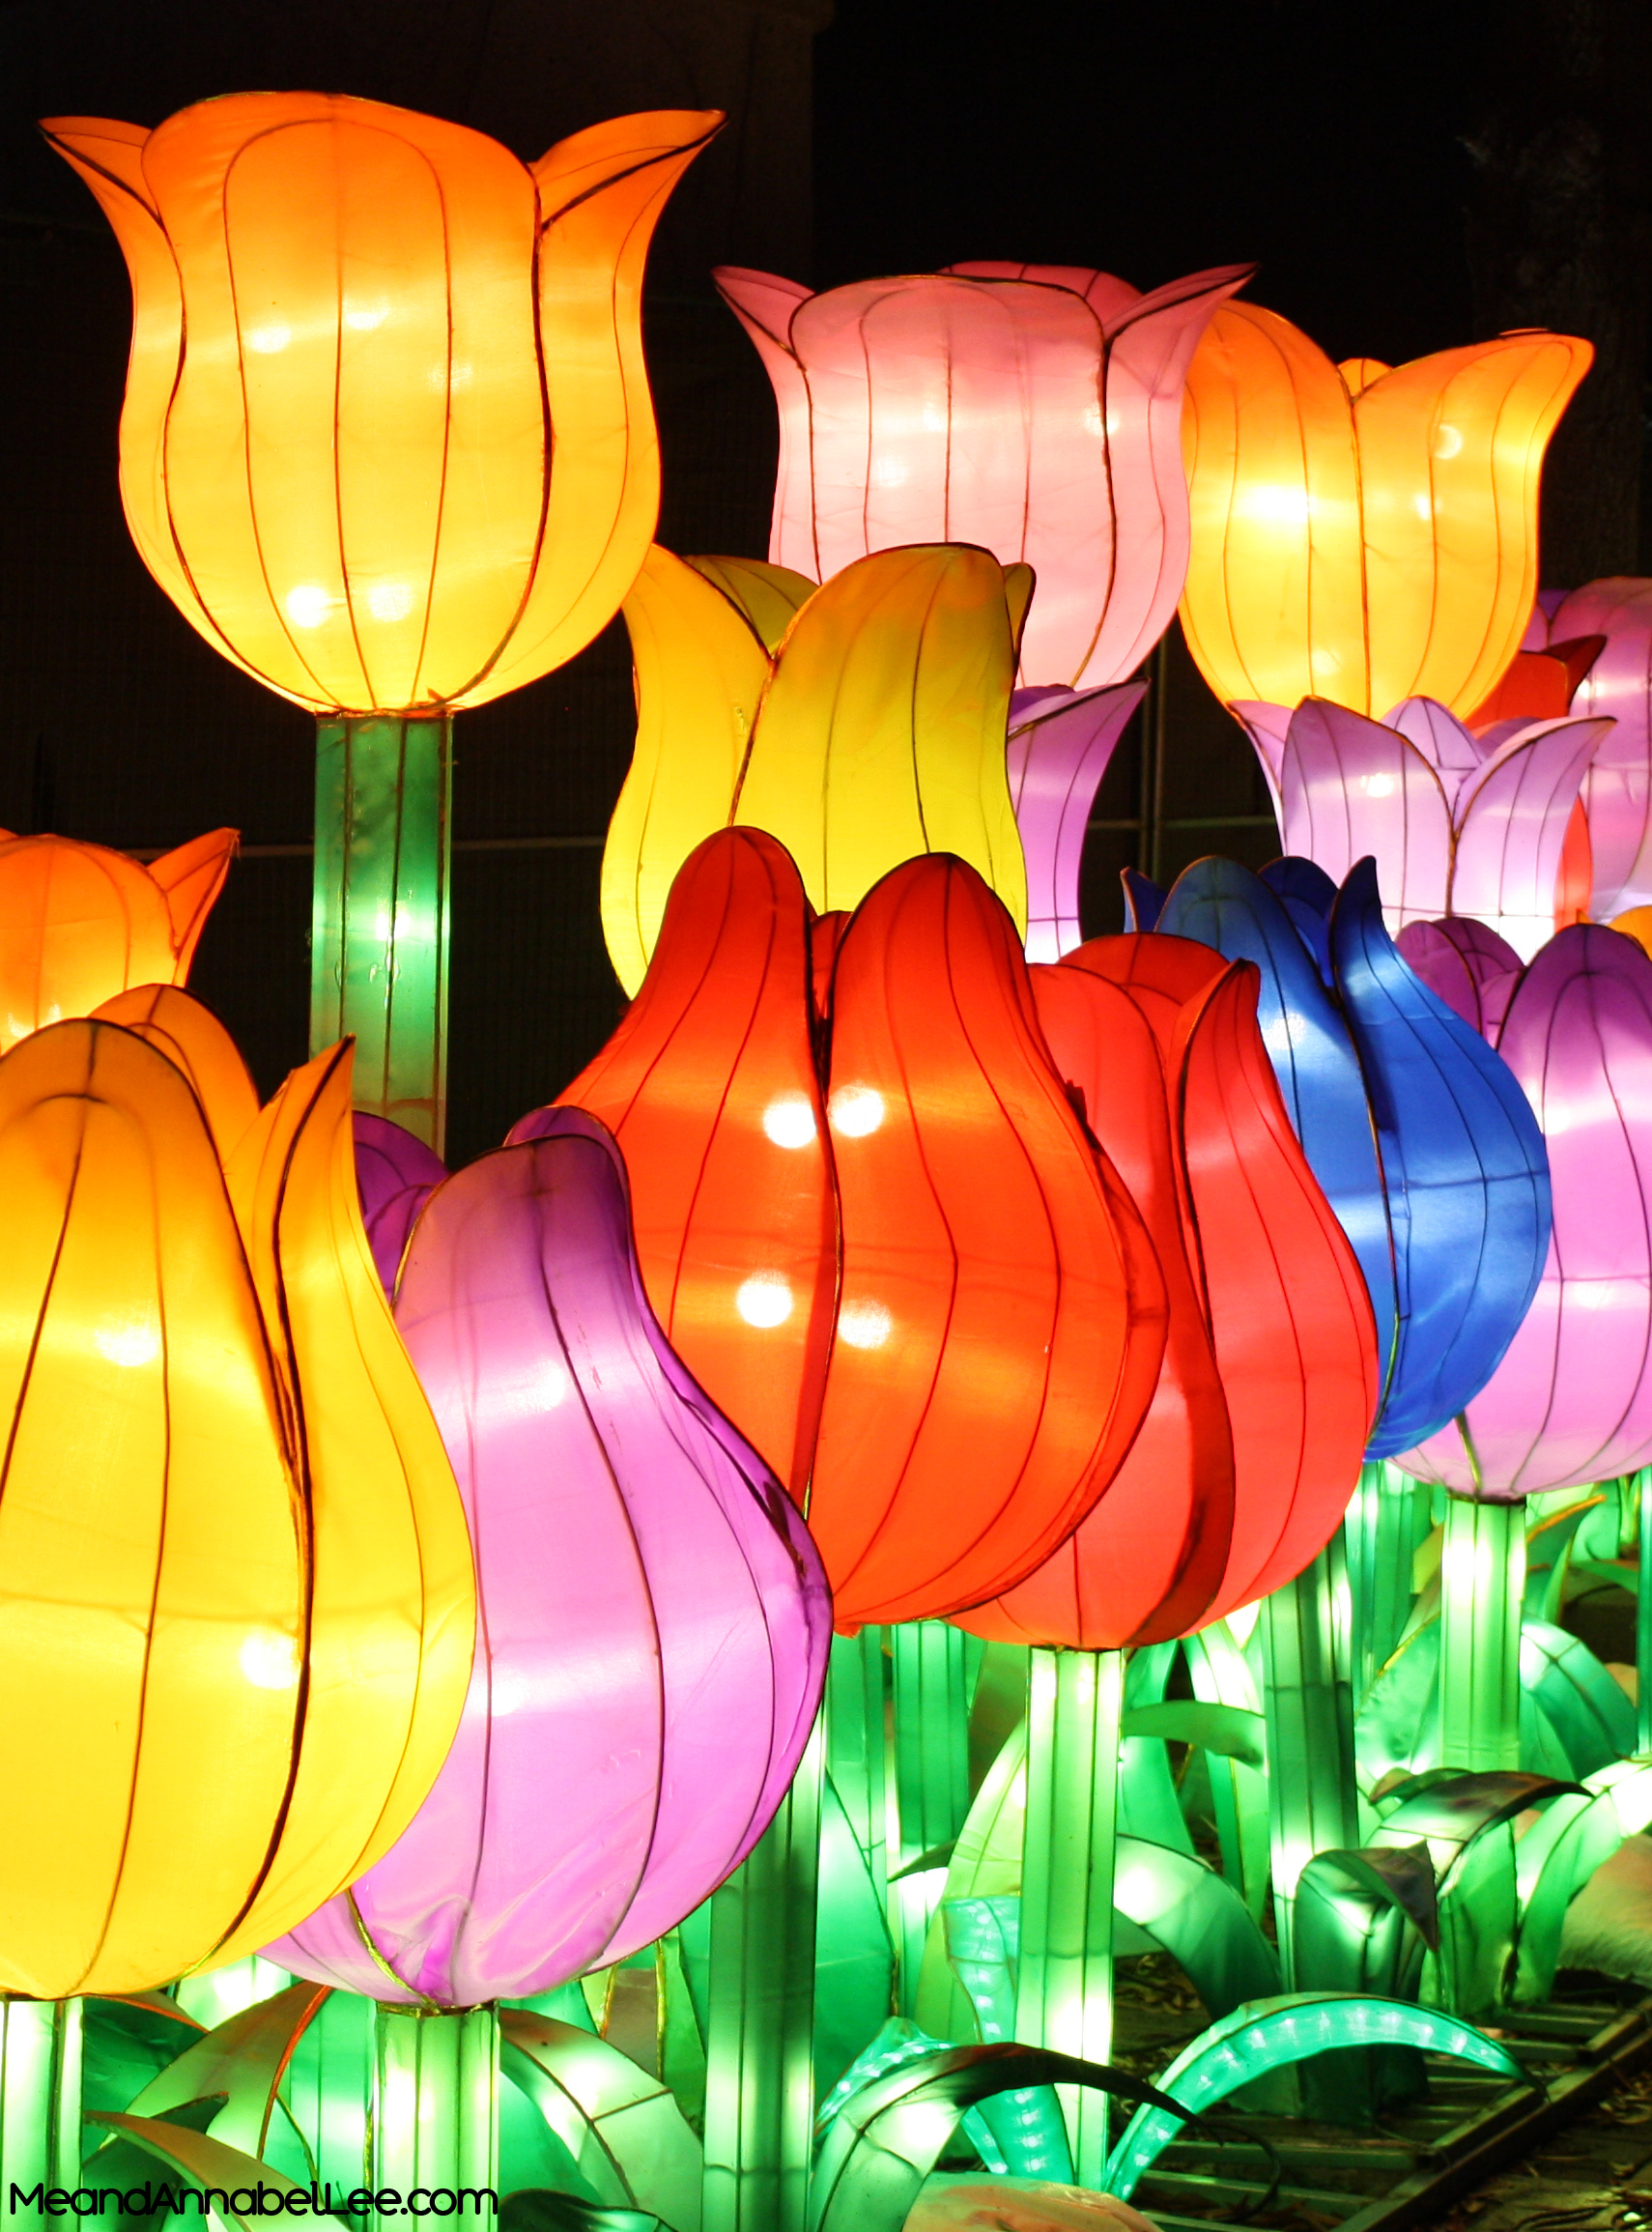 Things to do in Atlanta - Atlanta Chinese Lantern Festival - Downtown Atlanta - www.MeandAnnabelLee.com